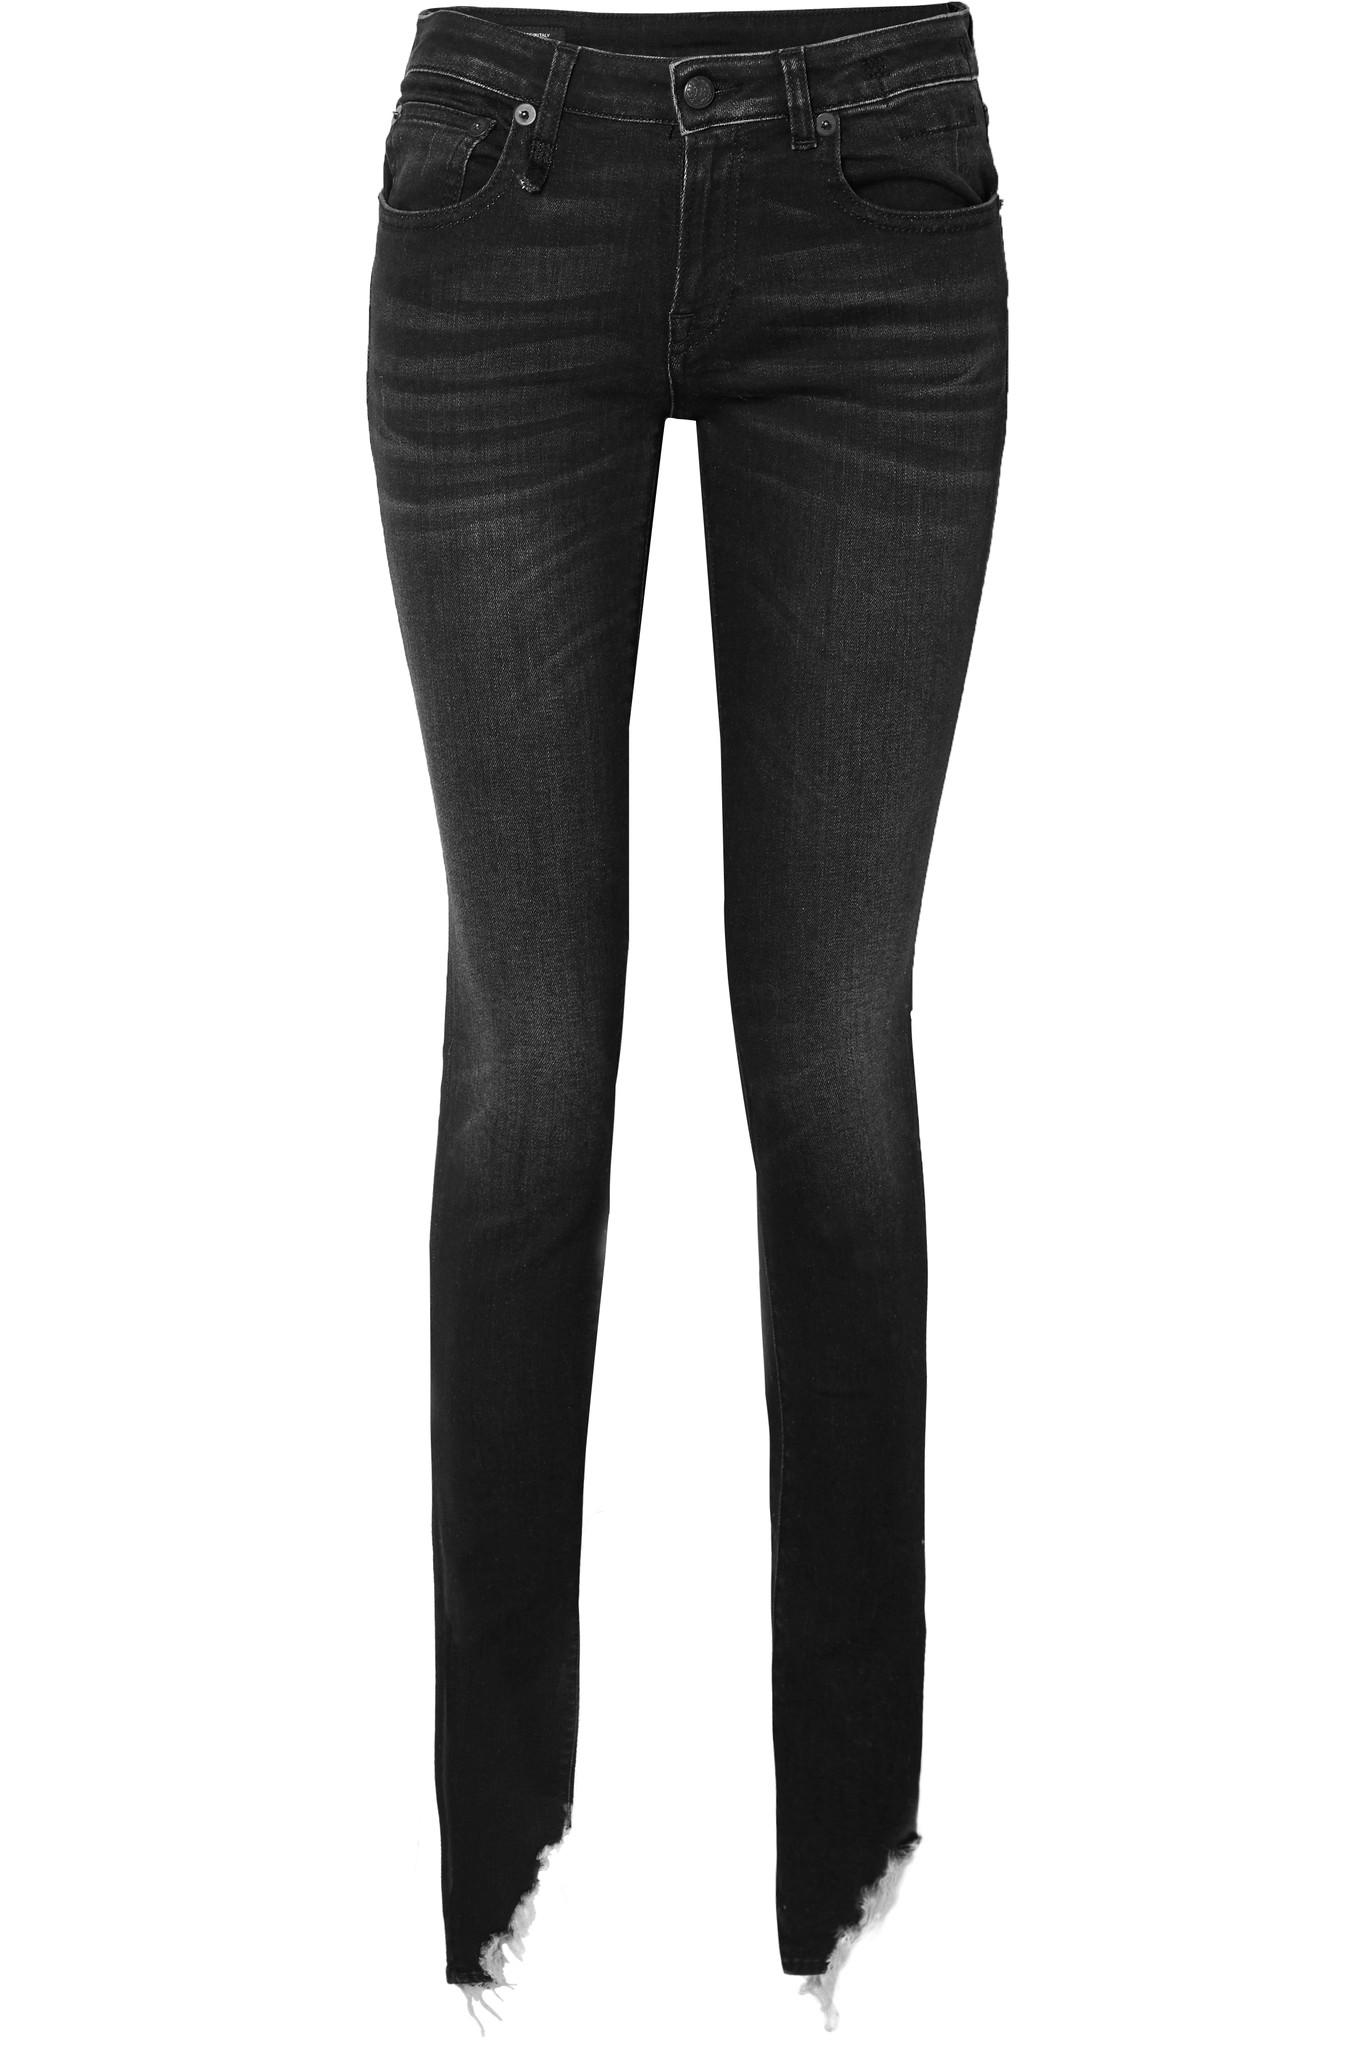 R13 Denim Kate Distressed Low-rise Skinny Jeans in Black - Lyst